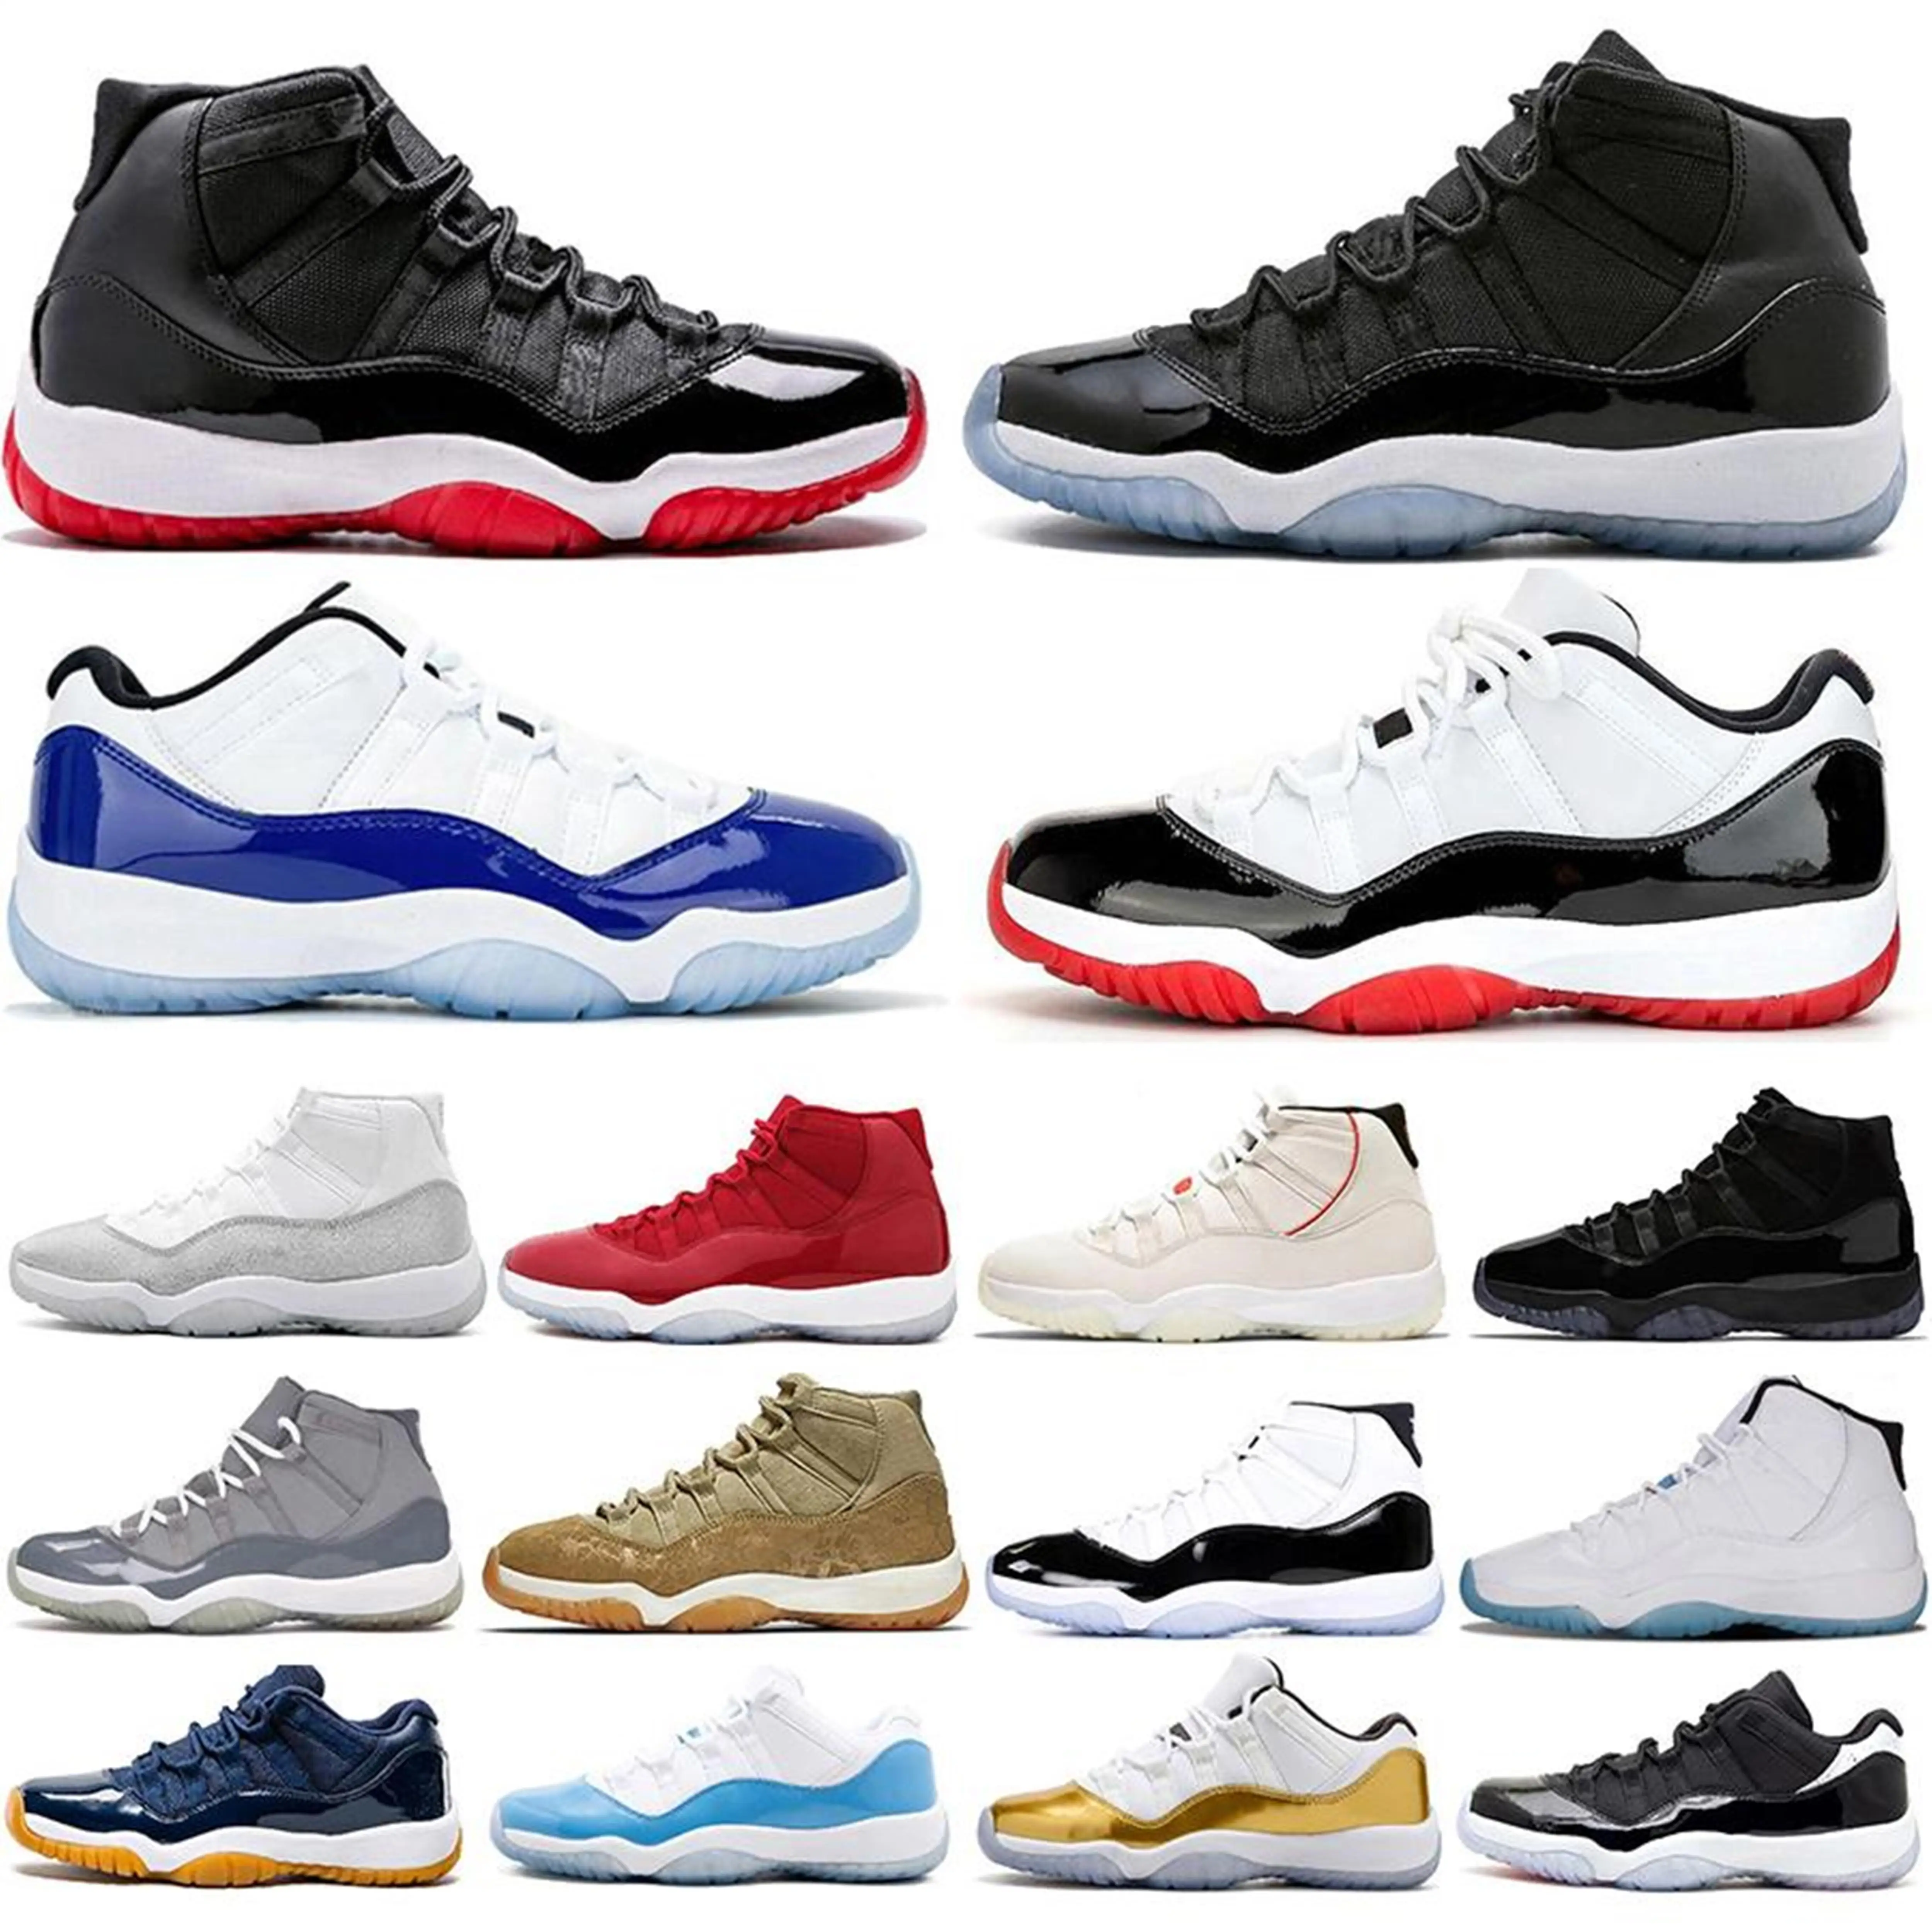 

newest High Quality retro 11 cool grey Bred shoes men women AJ 11s gray legend blue Basketball sneaker